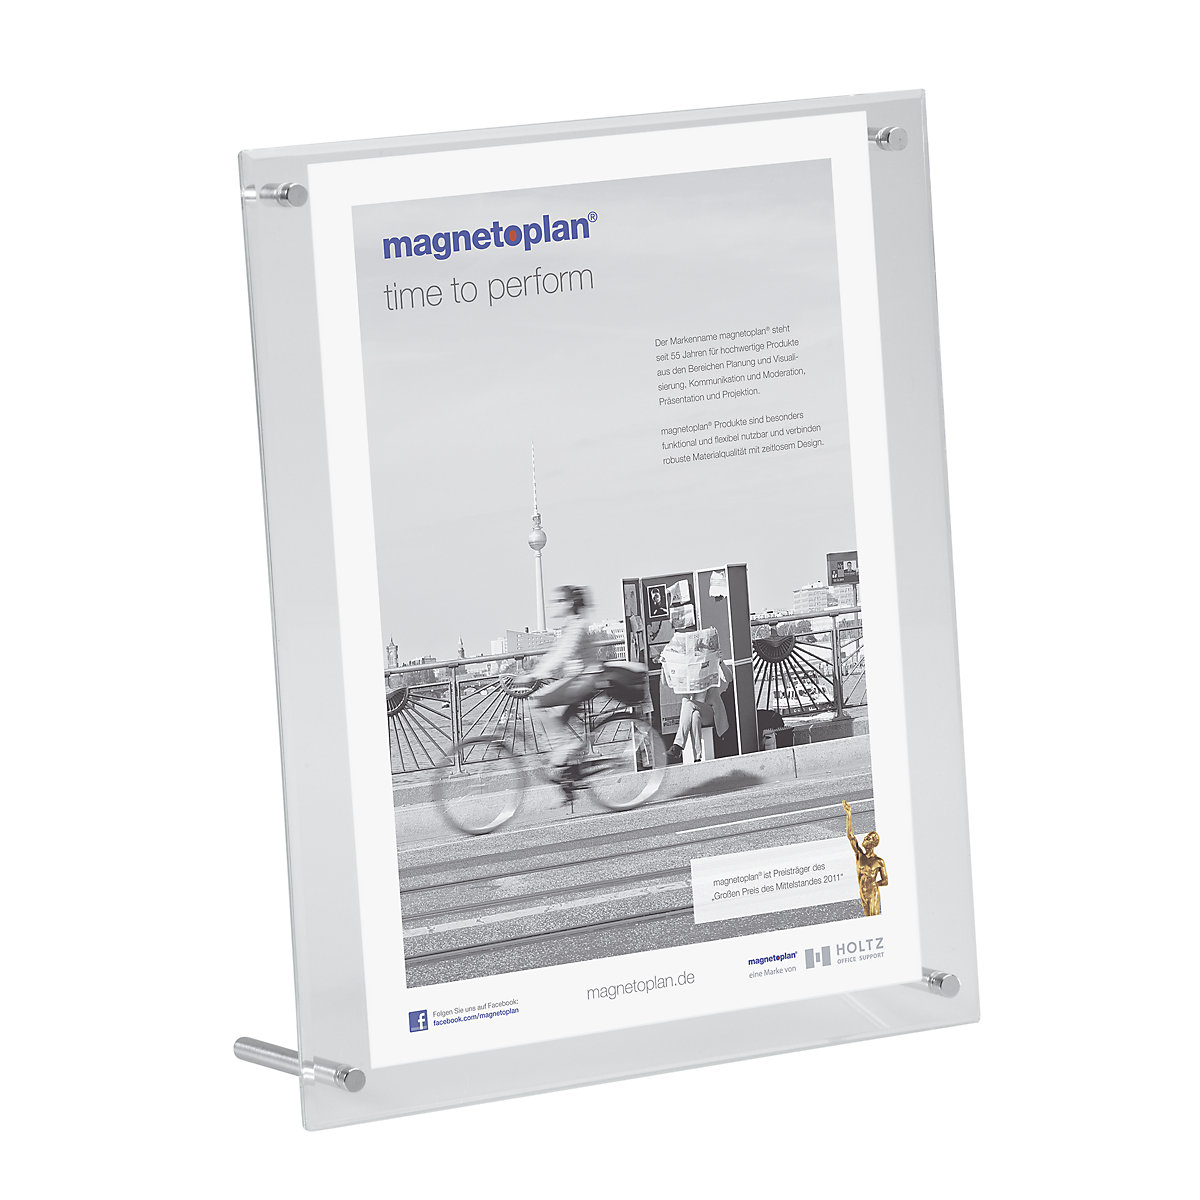 Namizno stojalo SUPERIOR IMAGE – magnetoplan (Slika izdelka 3)-2